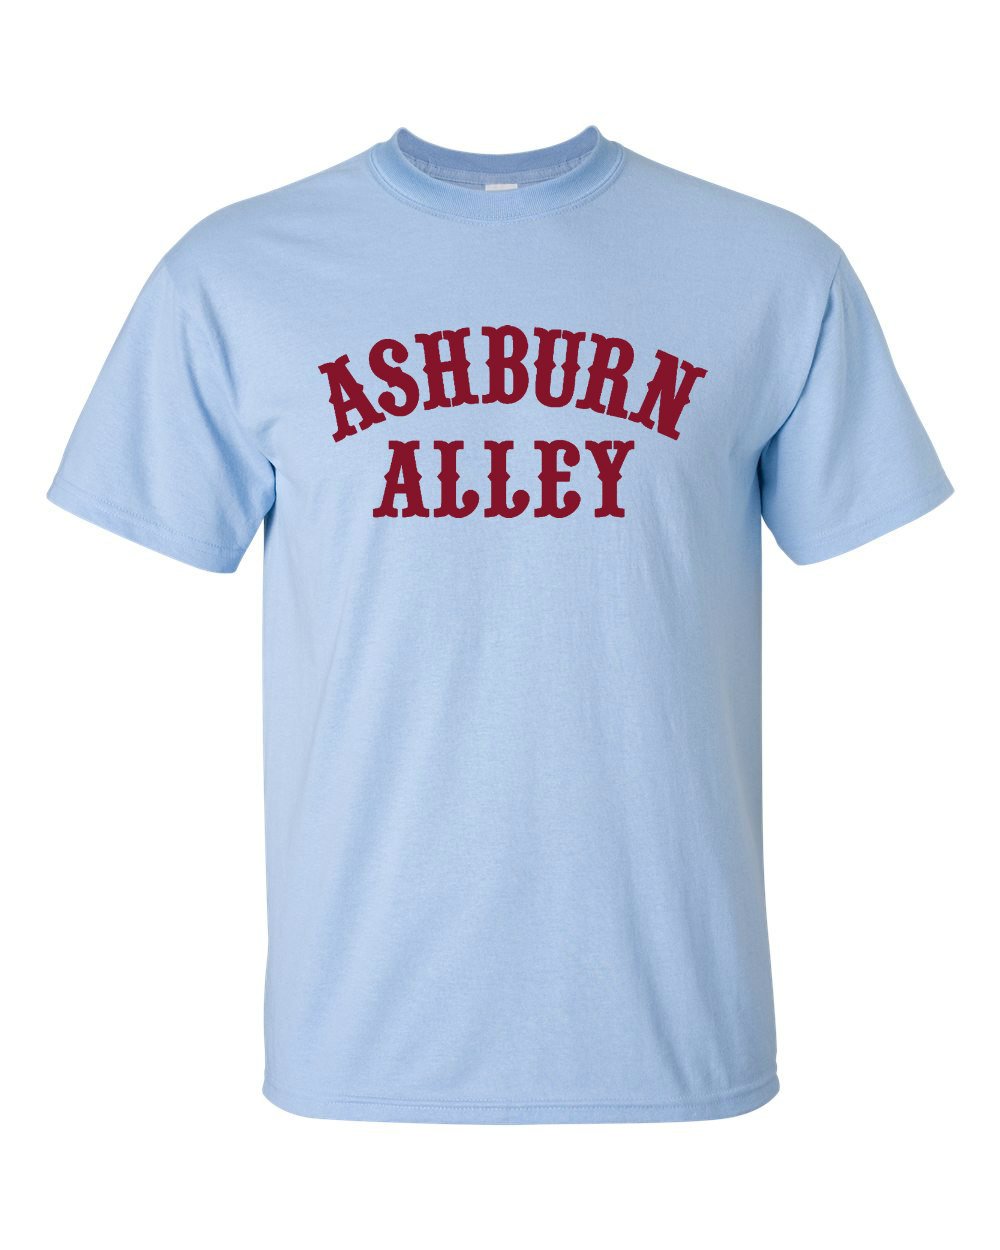 Ashburn Alley Mens/Unisex T-Shirt